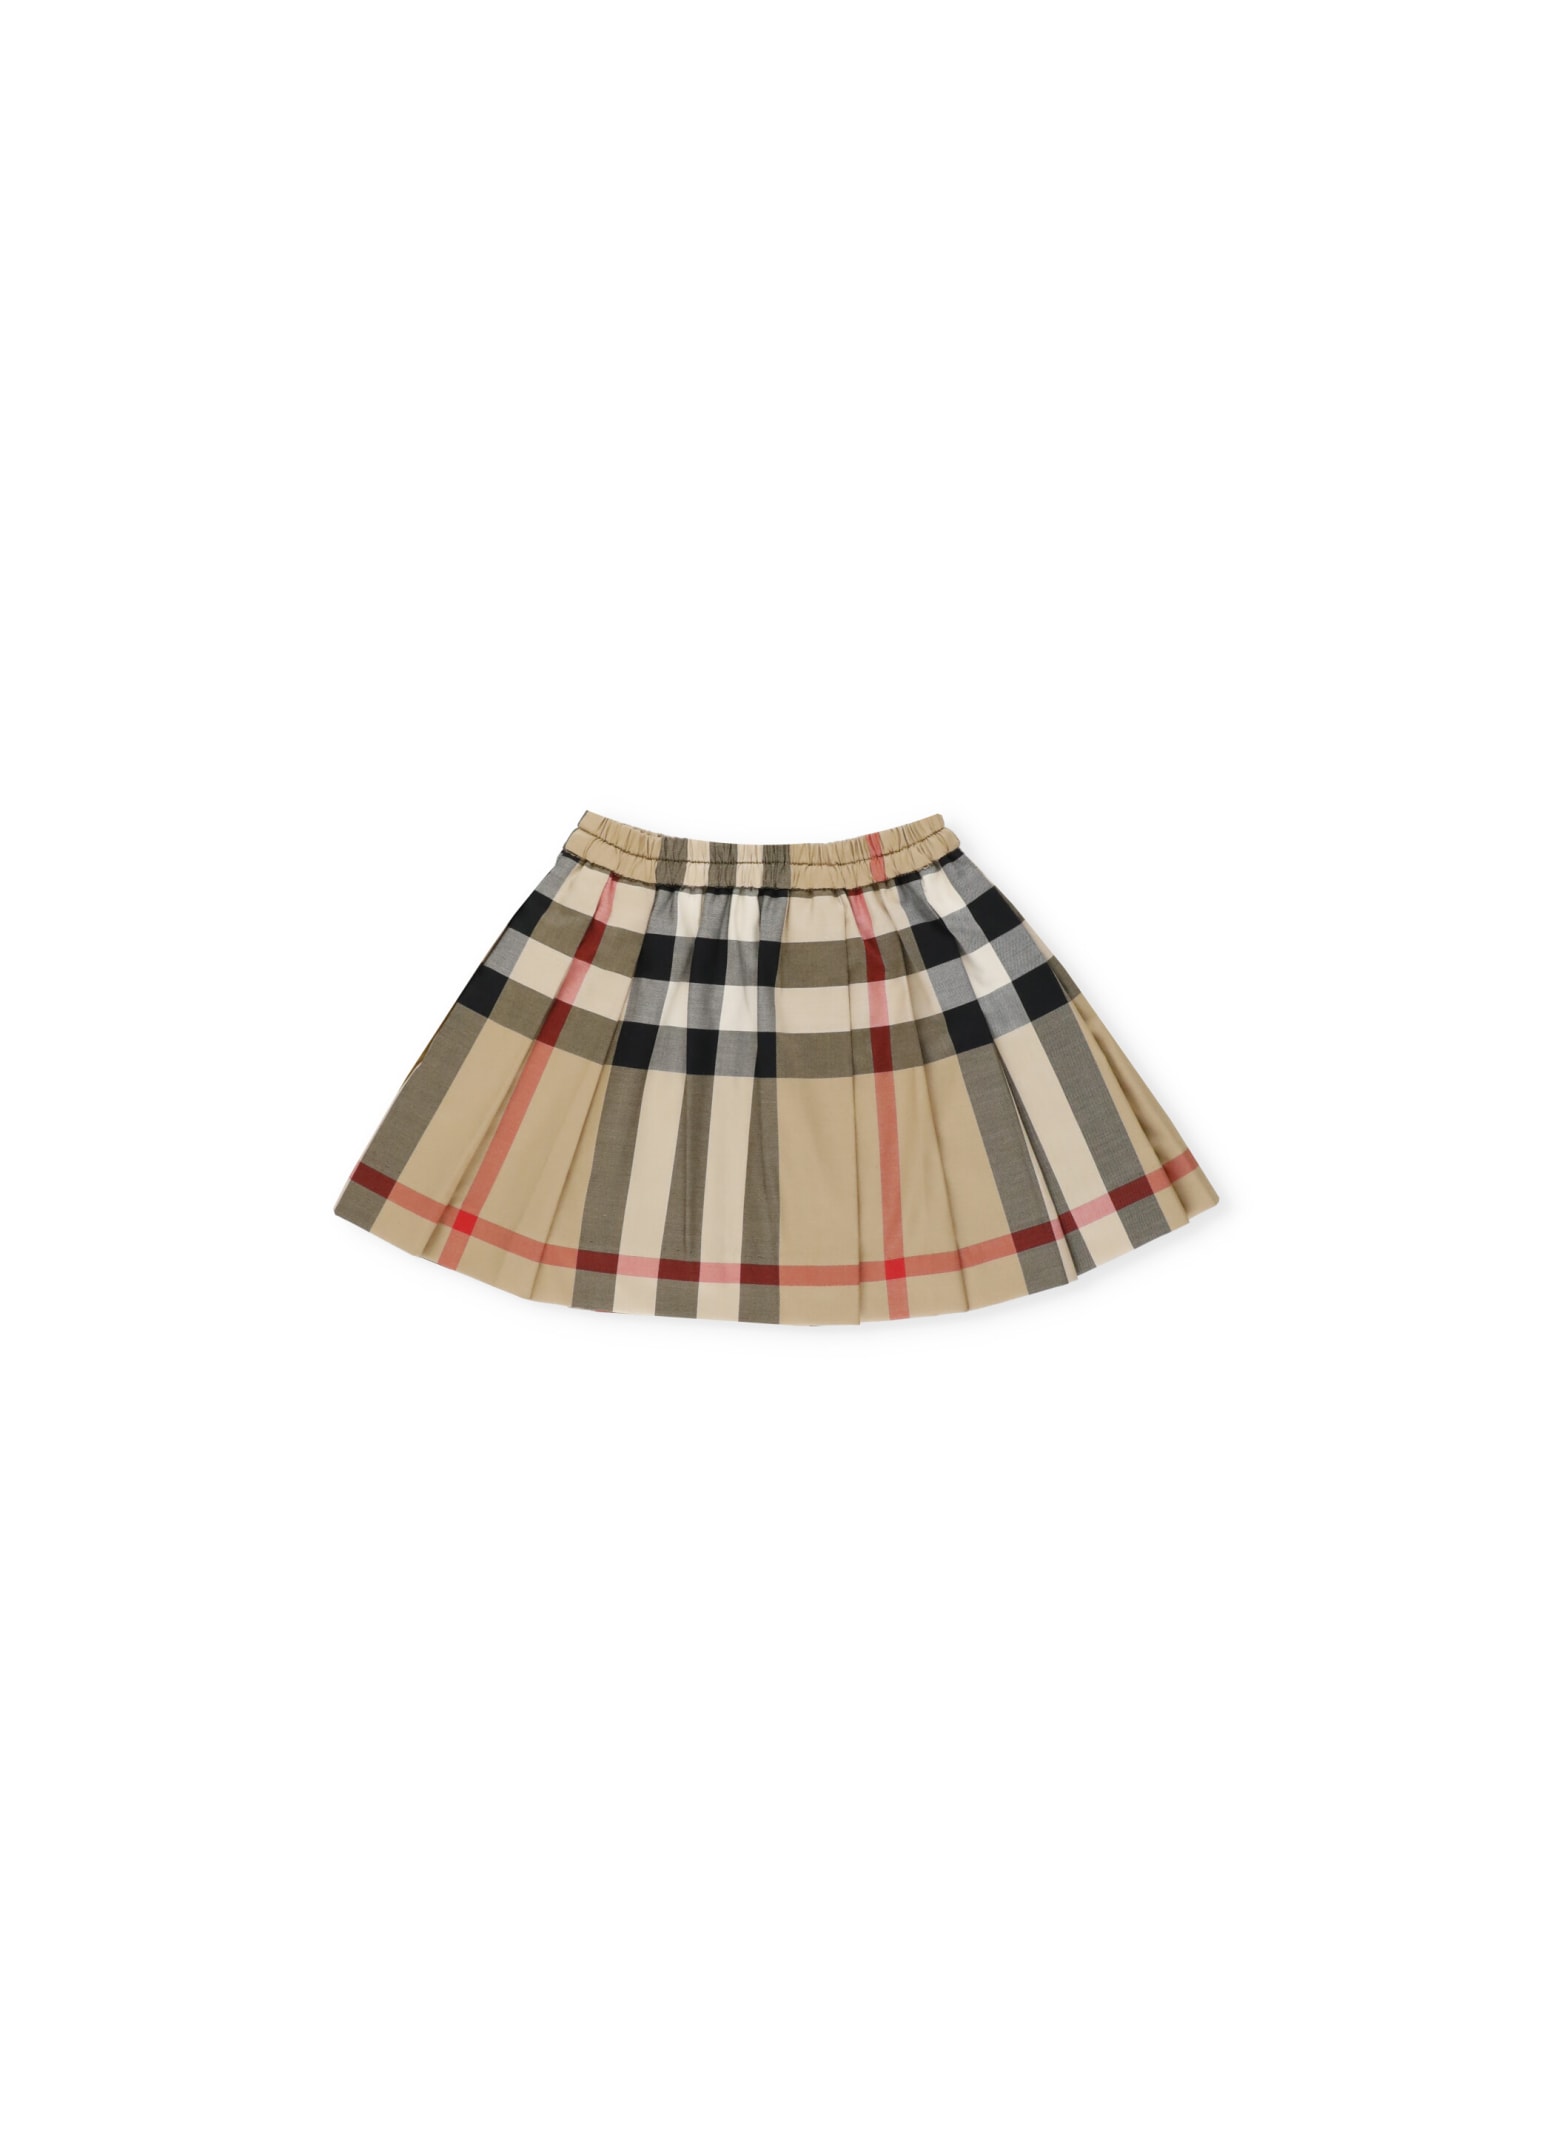 Burberry Check Pleated Mini Skirt